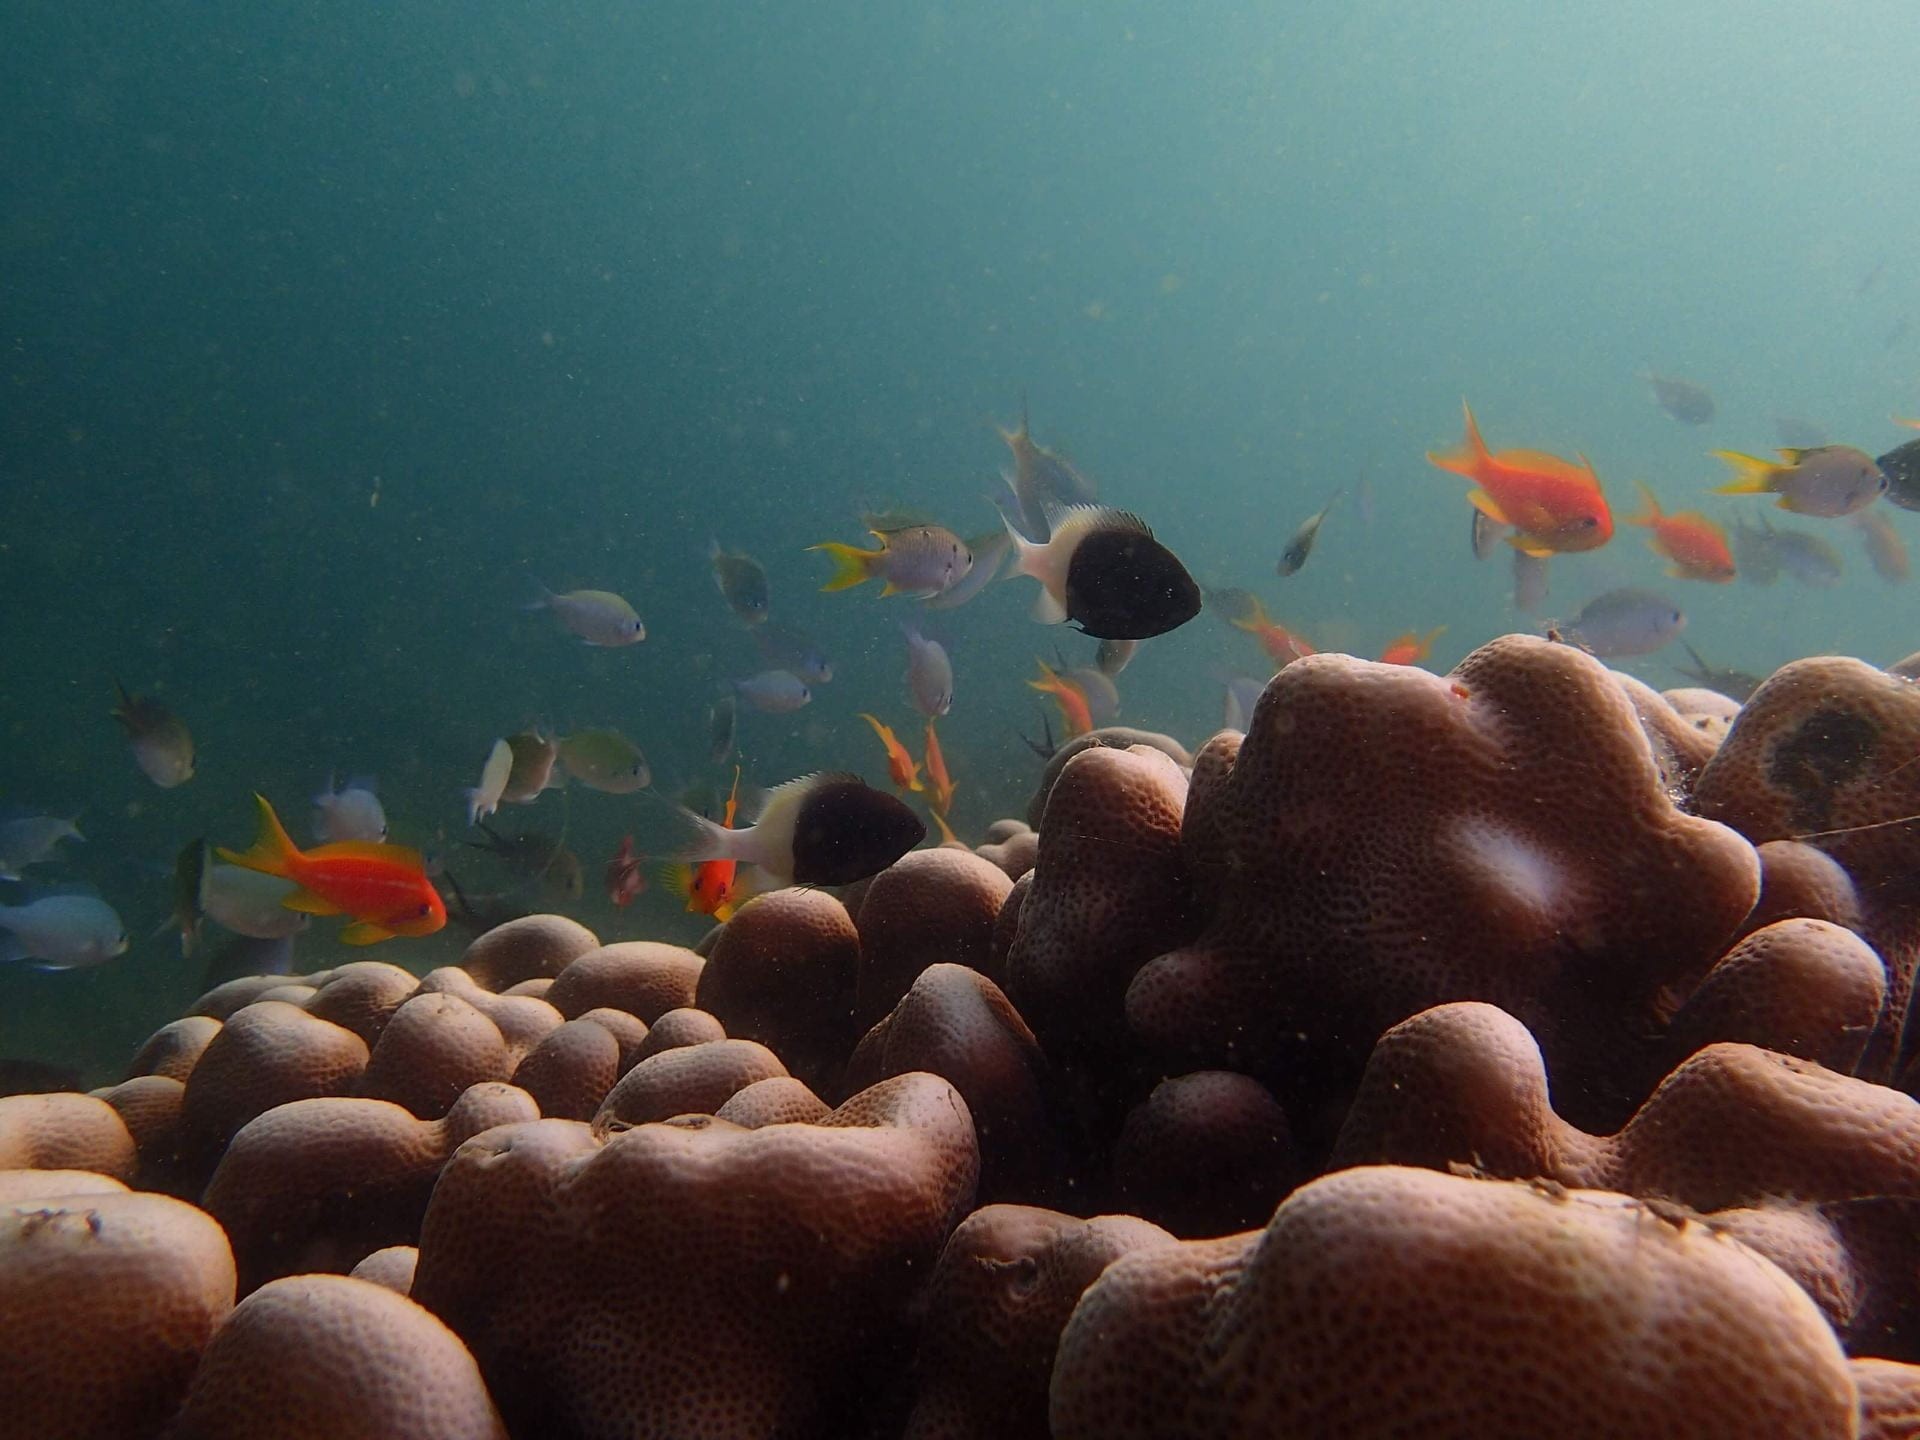 Underwater photo of the corals in the Indopacific ocean